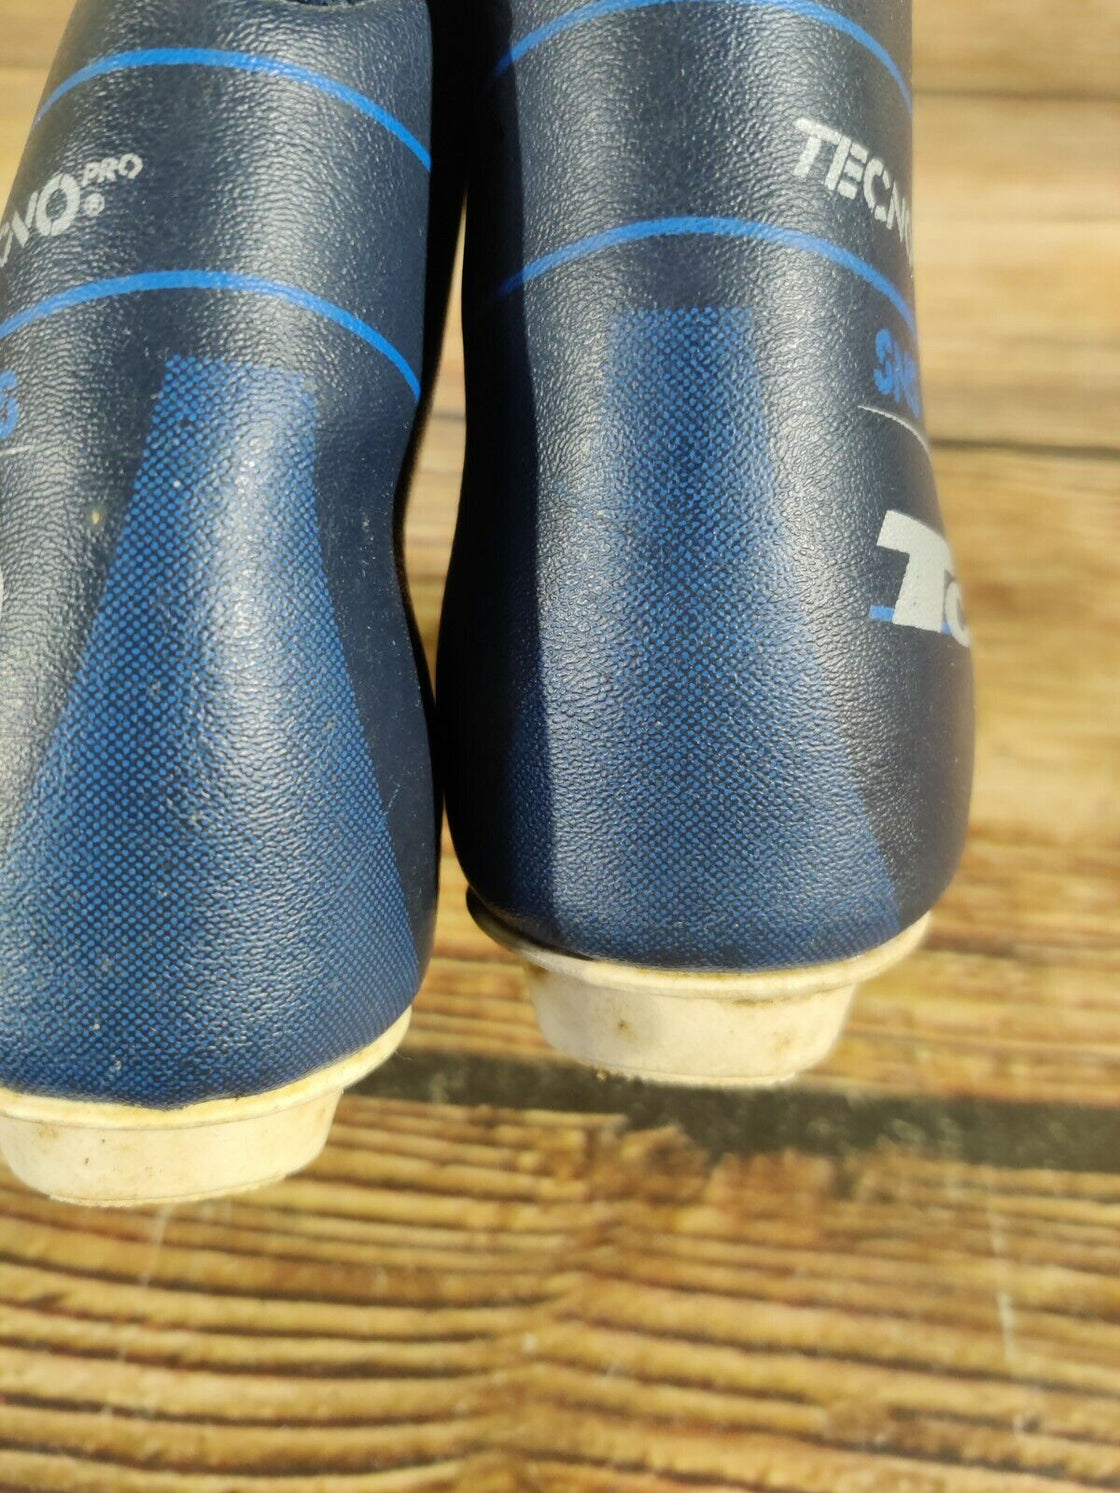 TECNO TC60 Cross Country Ski Boots Size EU35 US3 for SNS Old Bindings